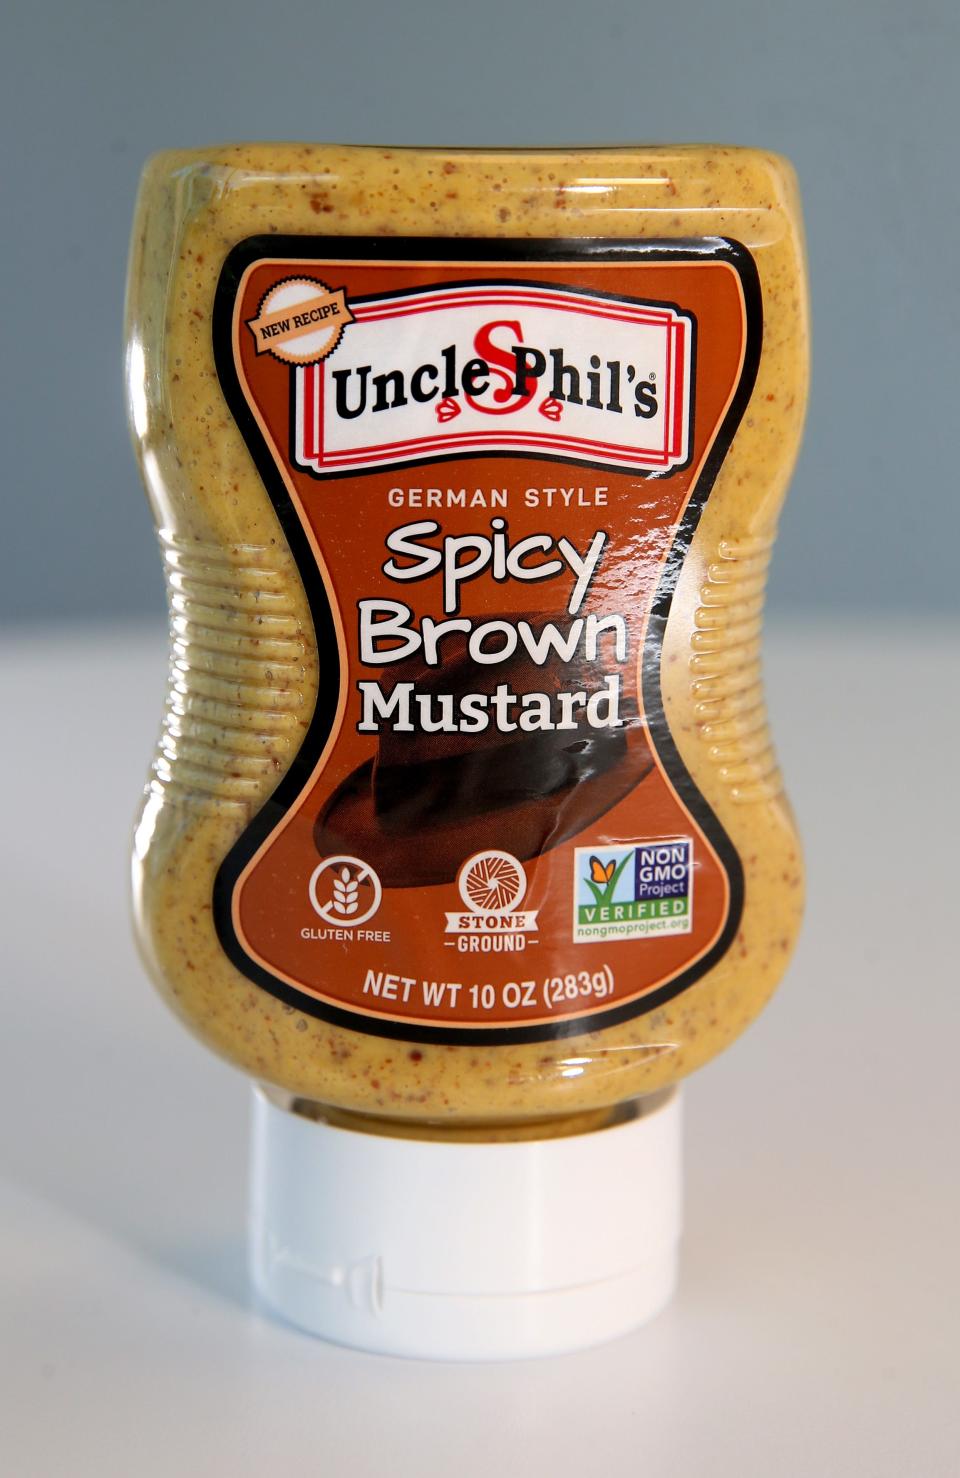 Uncle Phil’s German-style spicy brown mustard